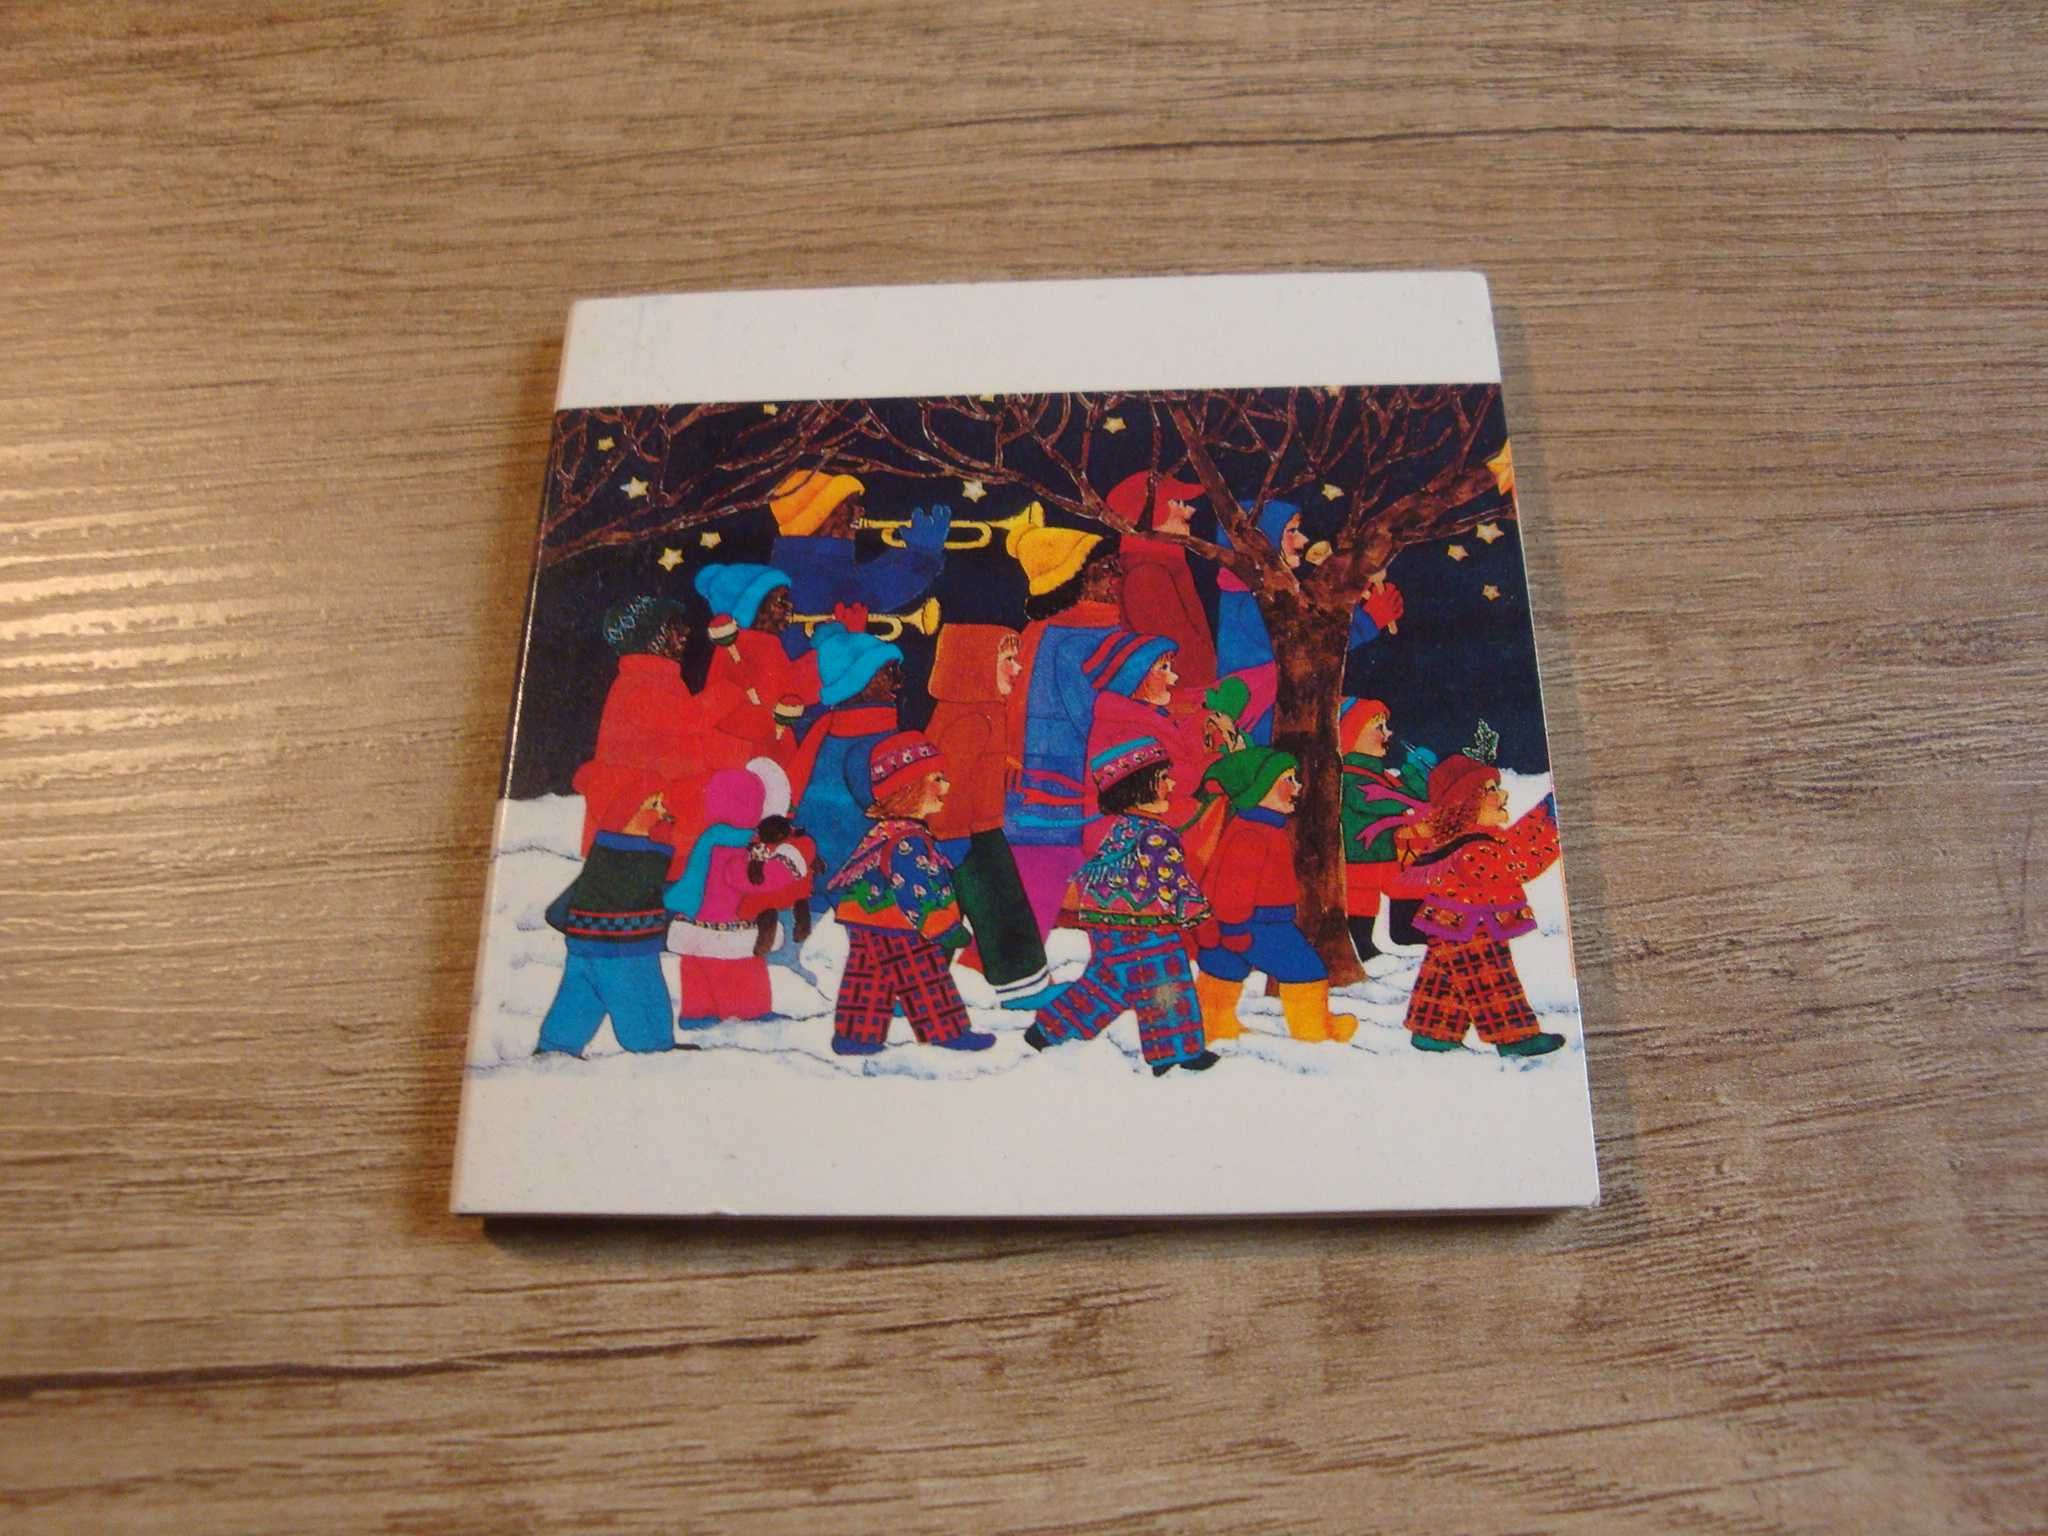 CSSR State Philharmonic - "Frohe Weihnachten" Classics (Mini CD)